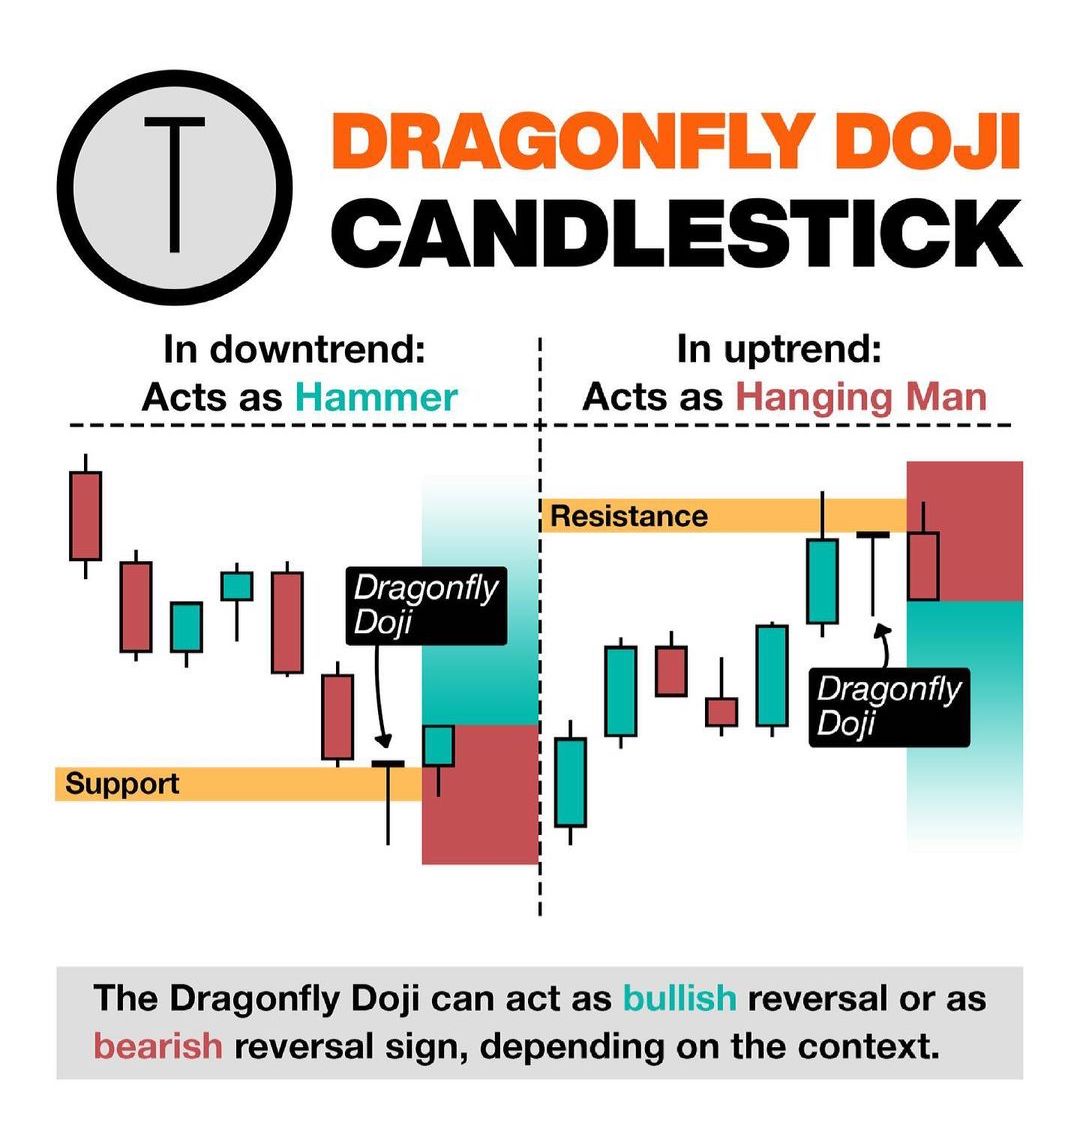 Dragonfly Doji Candlestick📊

Learn & Practice📈
#stocks #trading #stockmarket